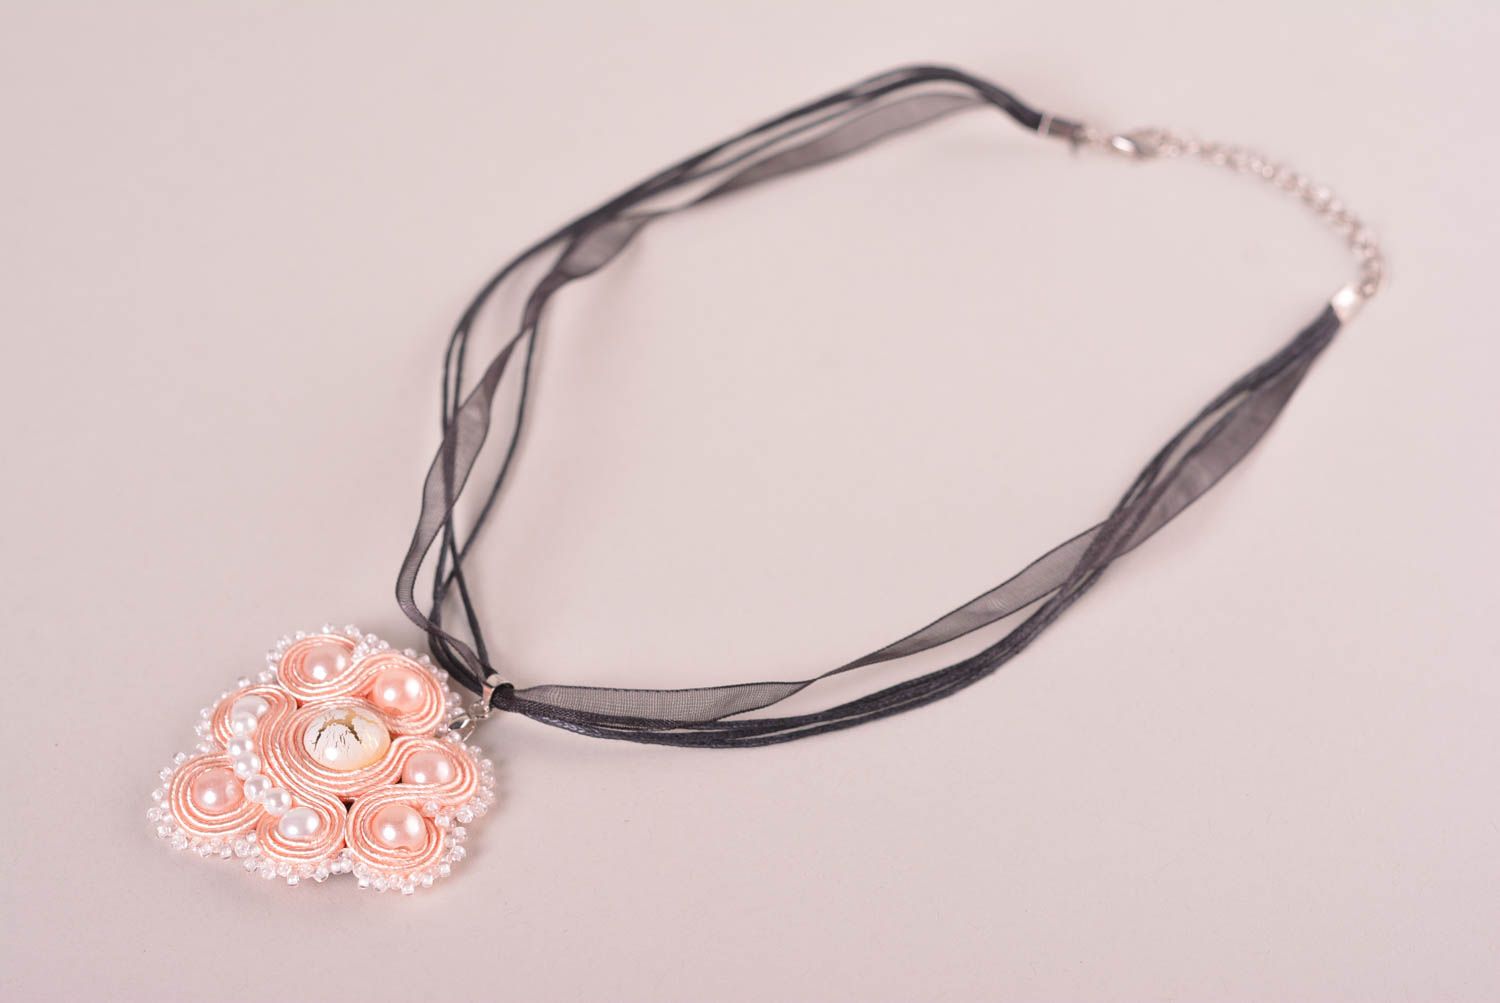 Handmade necklace charm necklace soutache pendant necklace designer jewelry photo 1